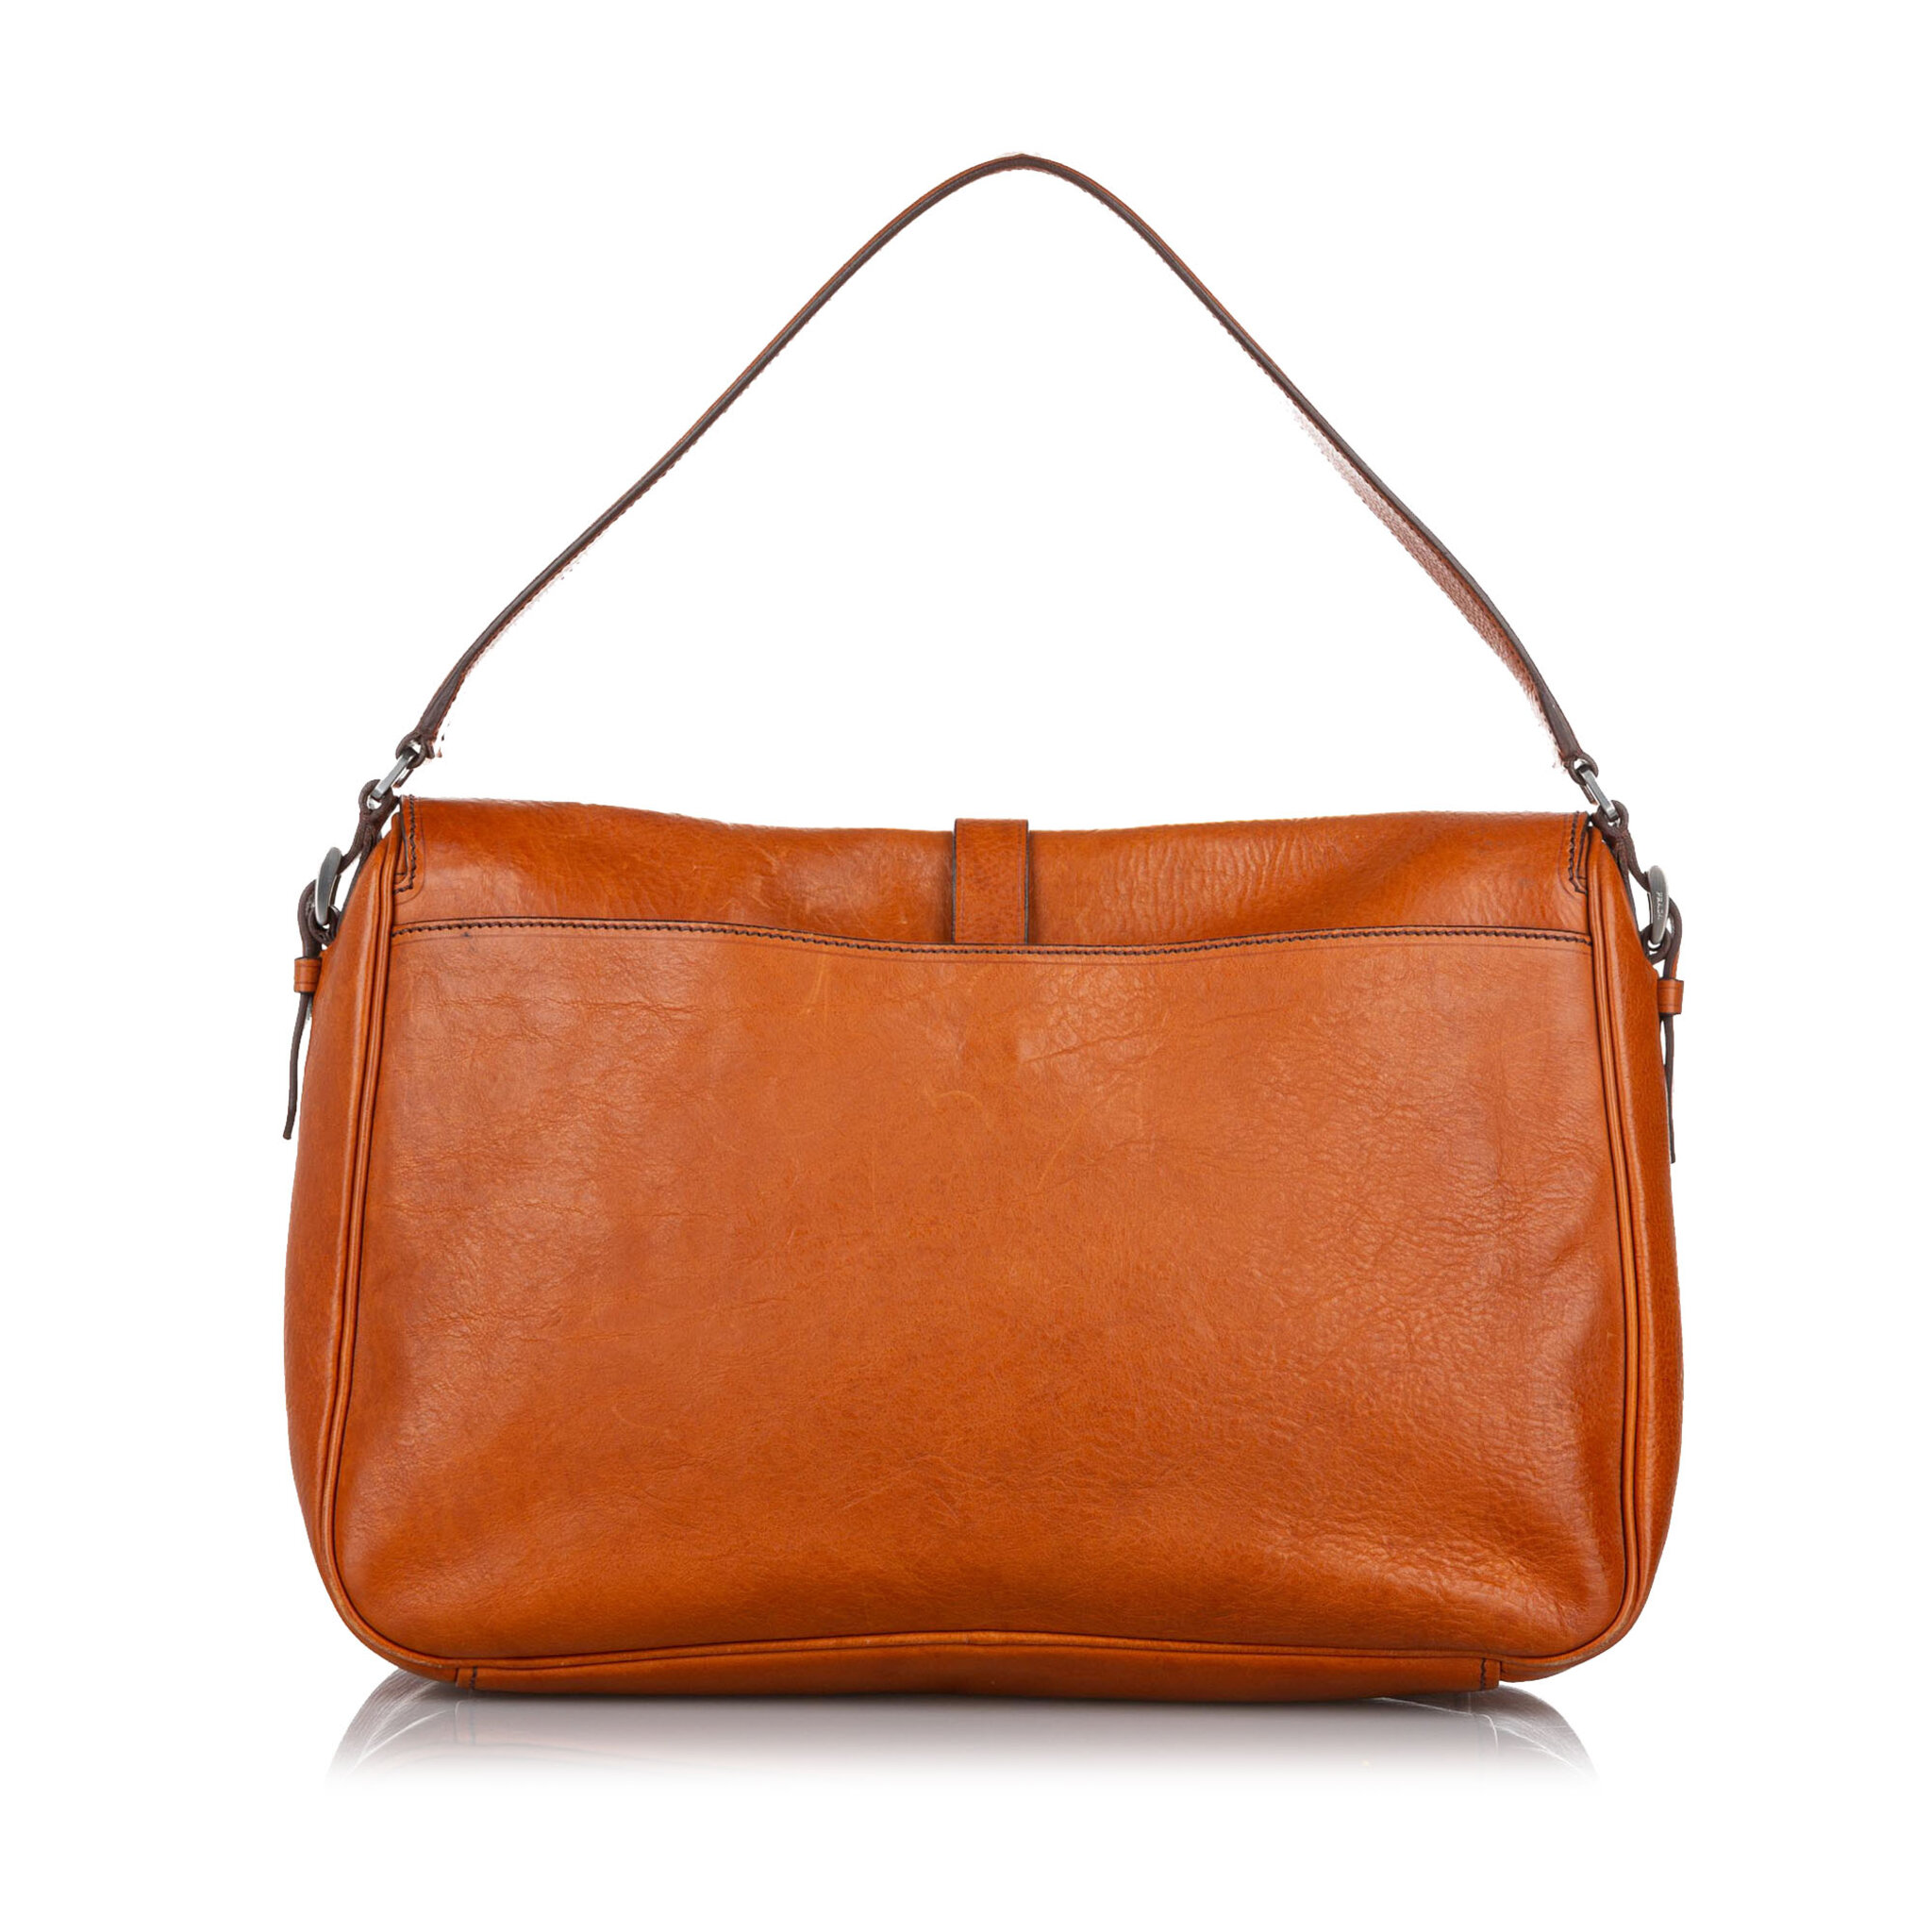 Prada Leather Shoulder Bag, brown